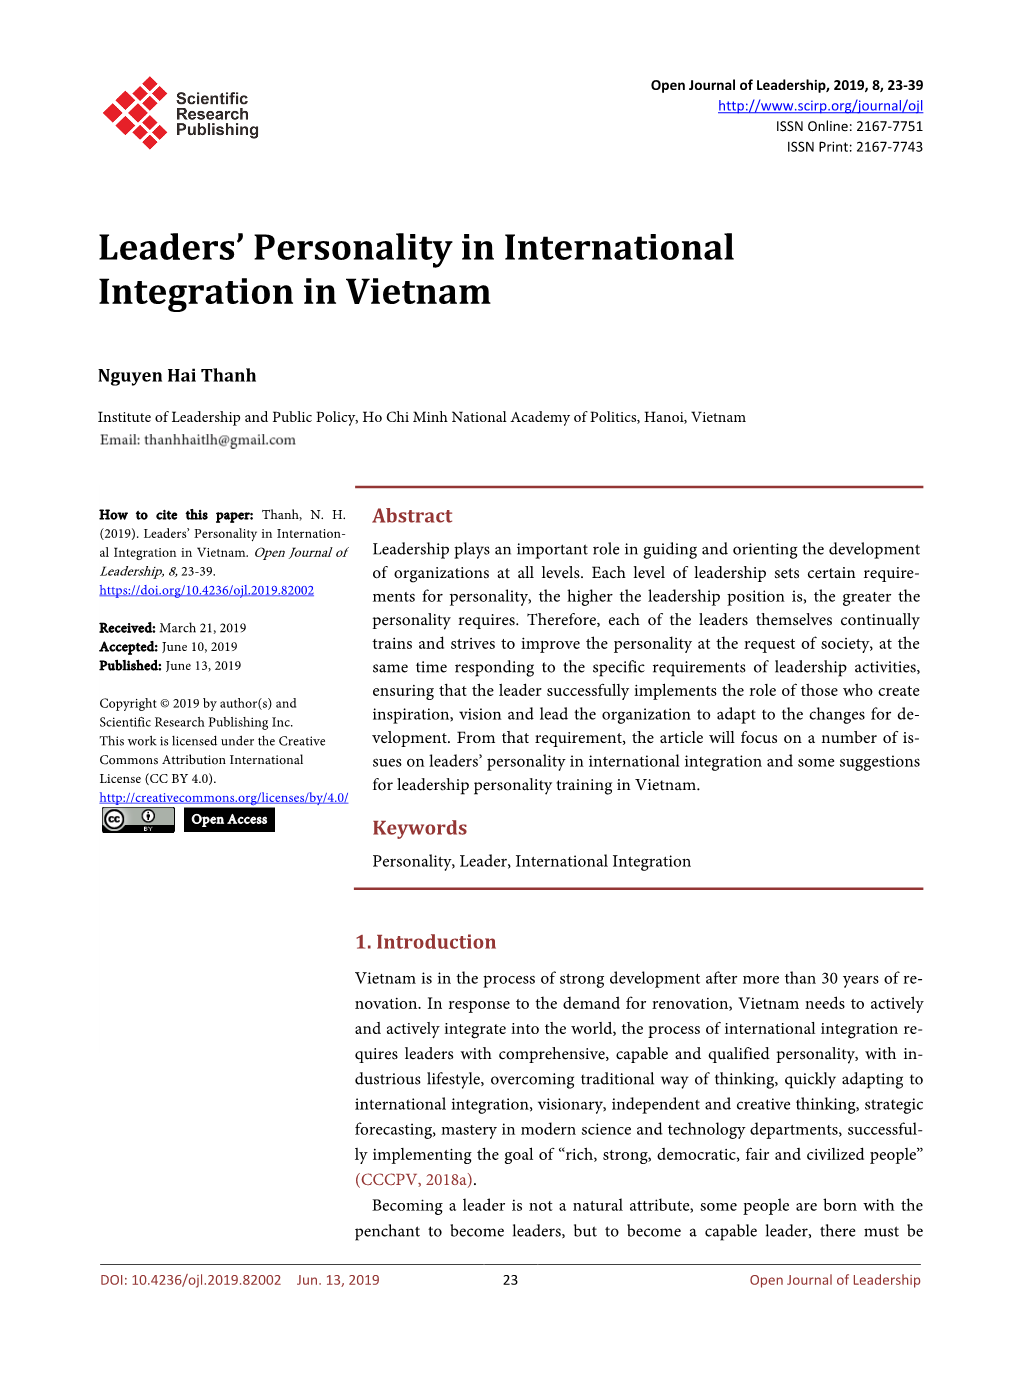 Leaders' Personality in International Integration in Vietnam